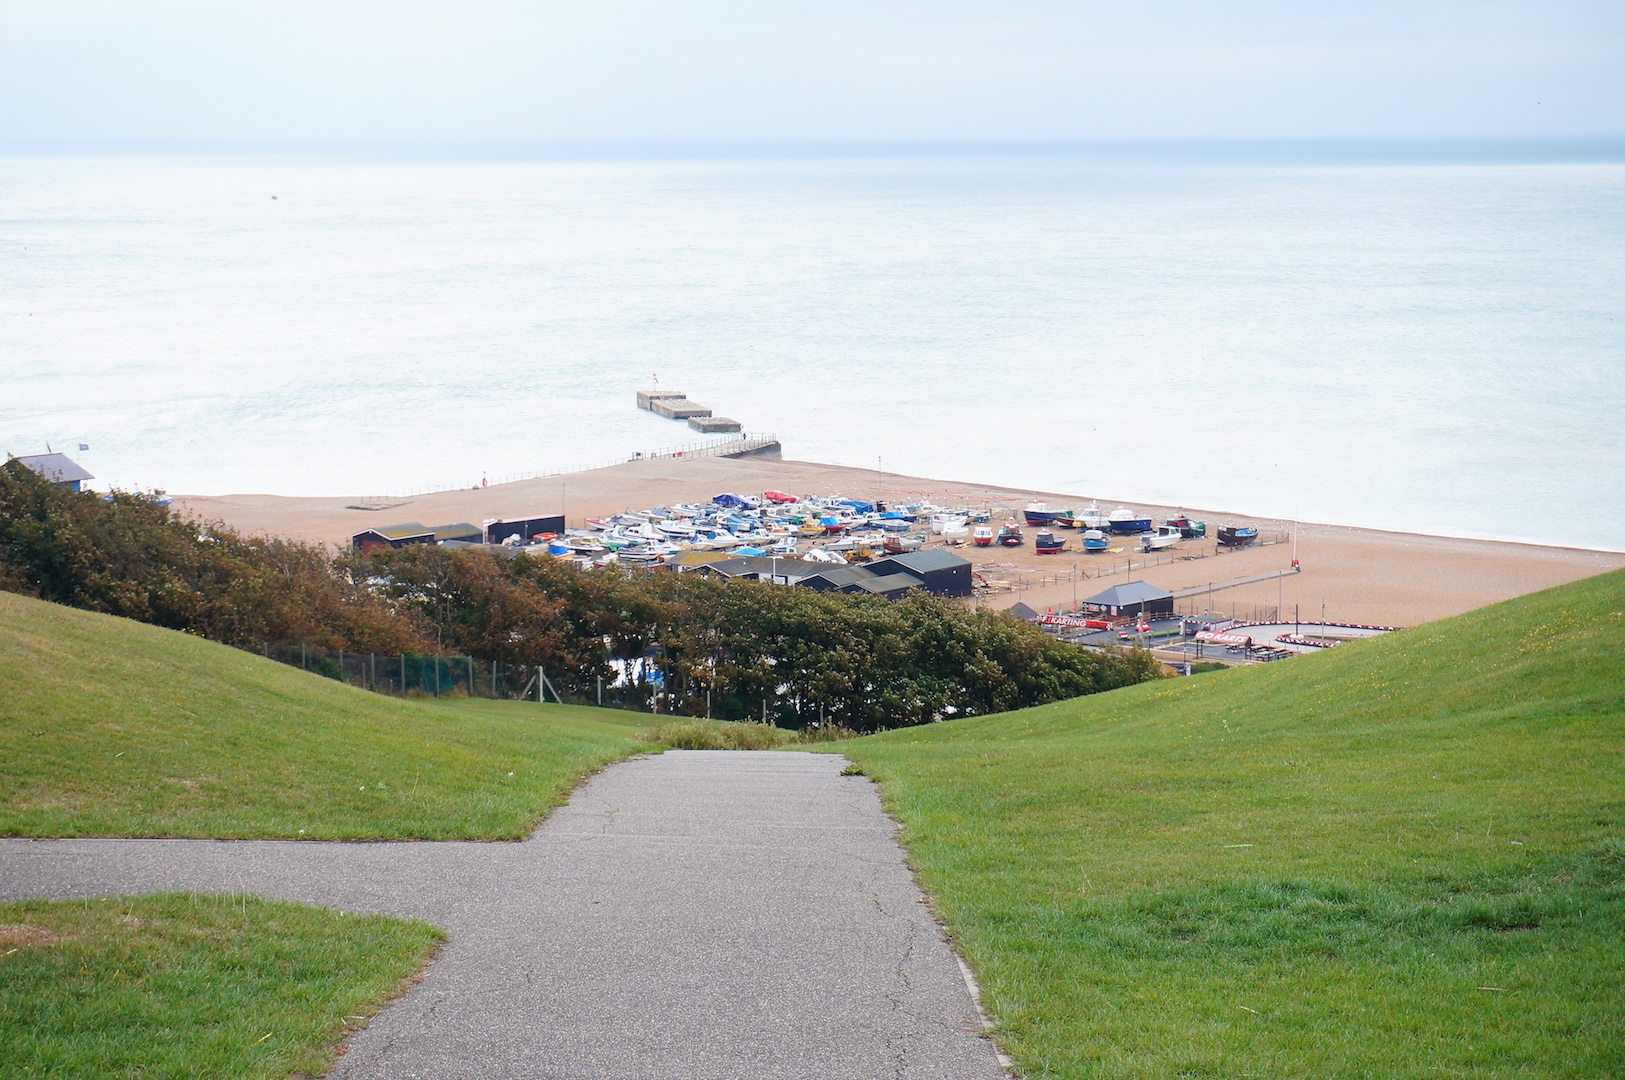 View of Hastings